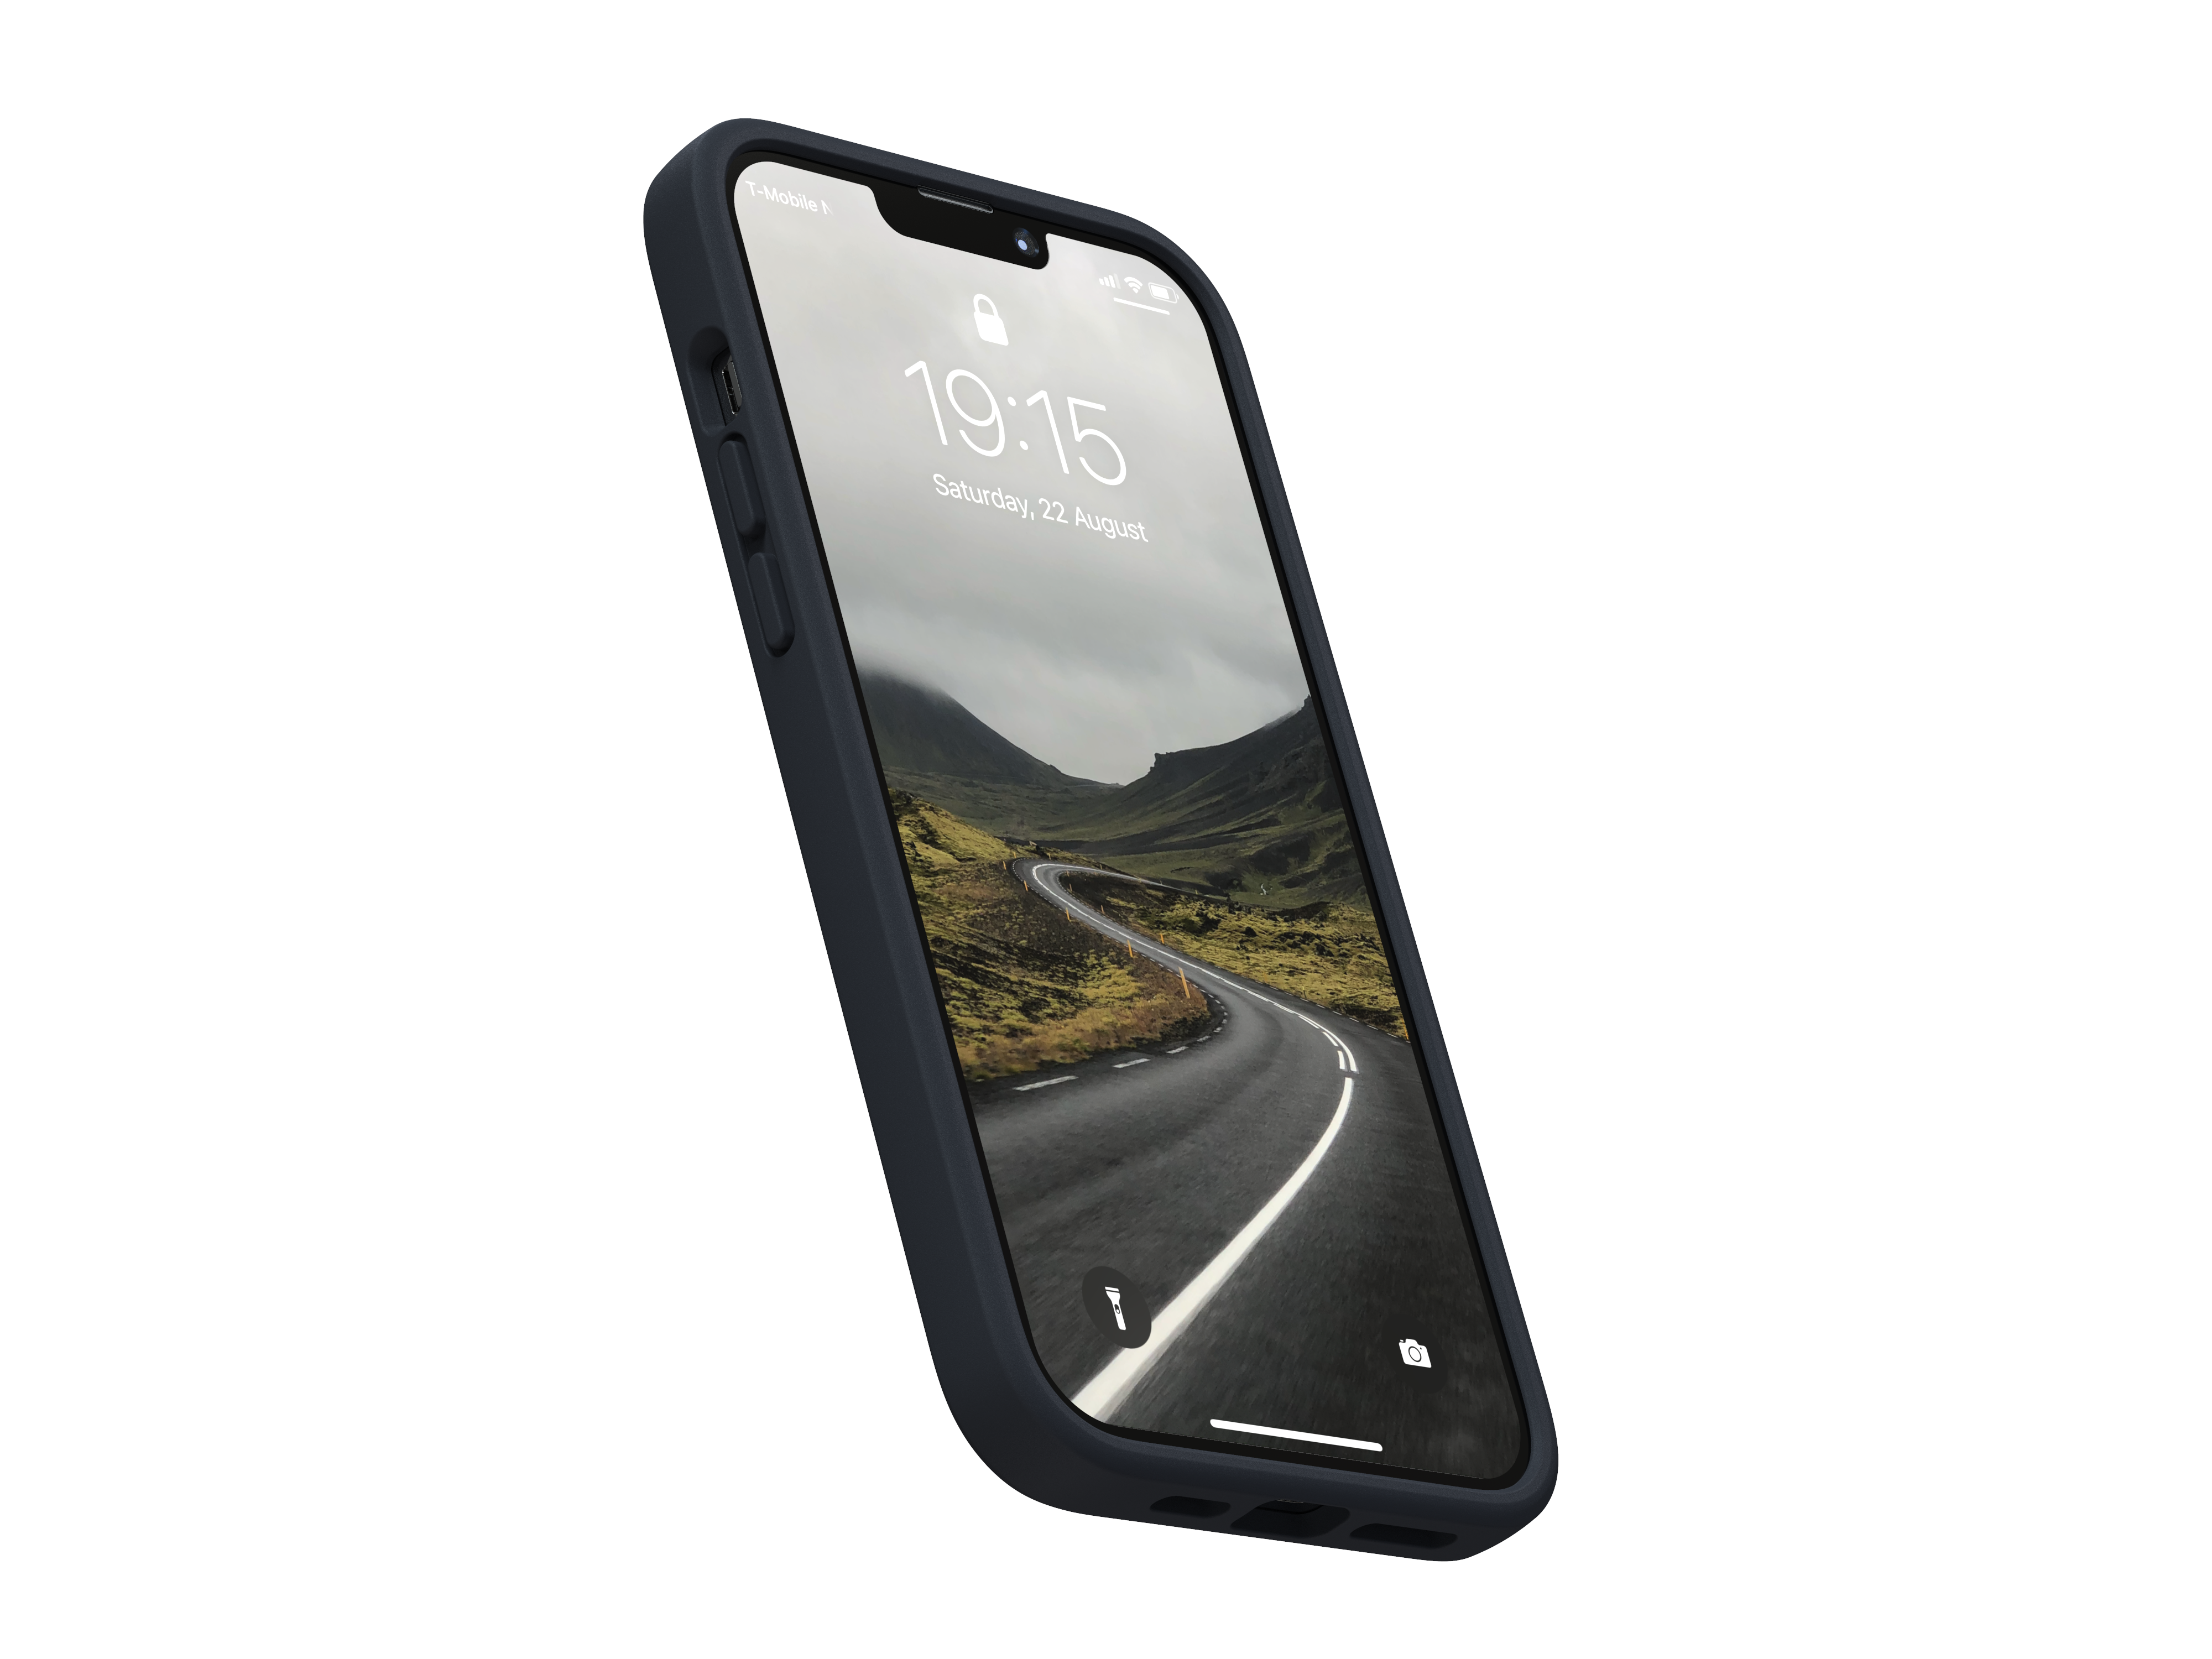 NJORD Njord, Dunkelgrau iPhone 13 Pro Max, Apple, Backcover